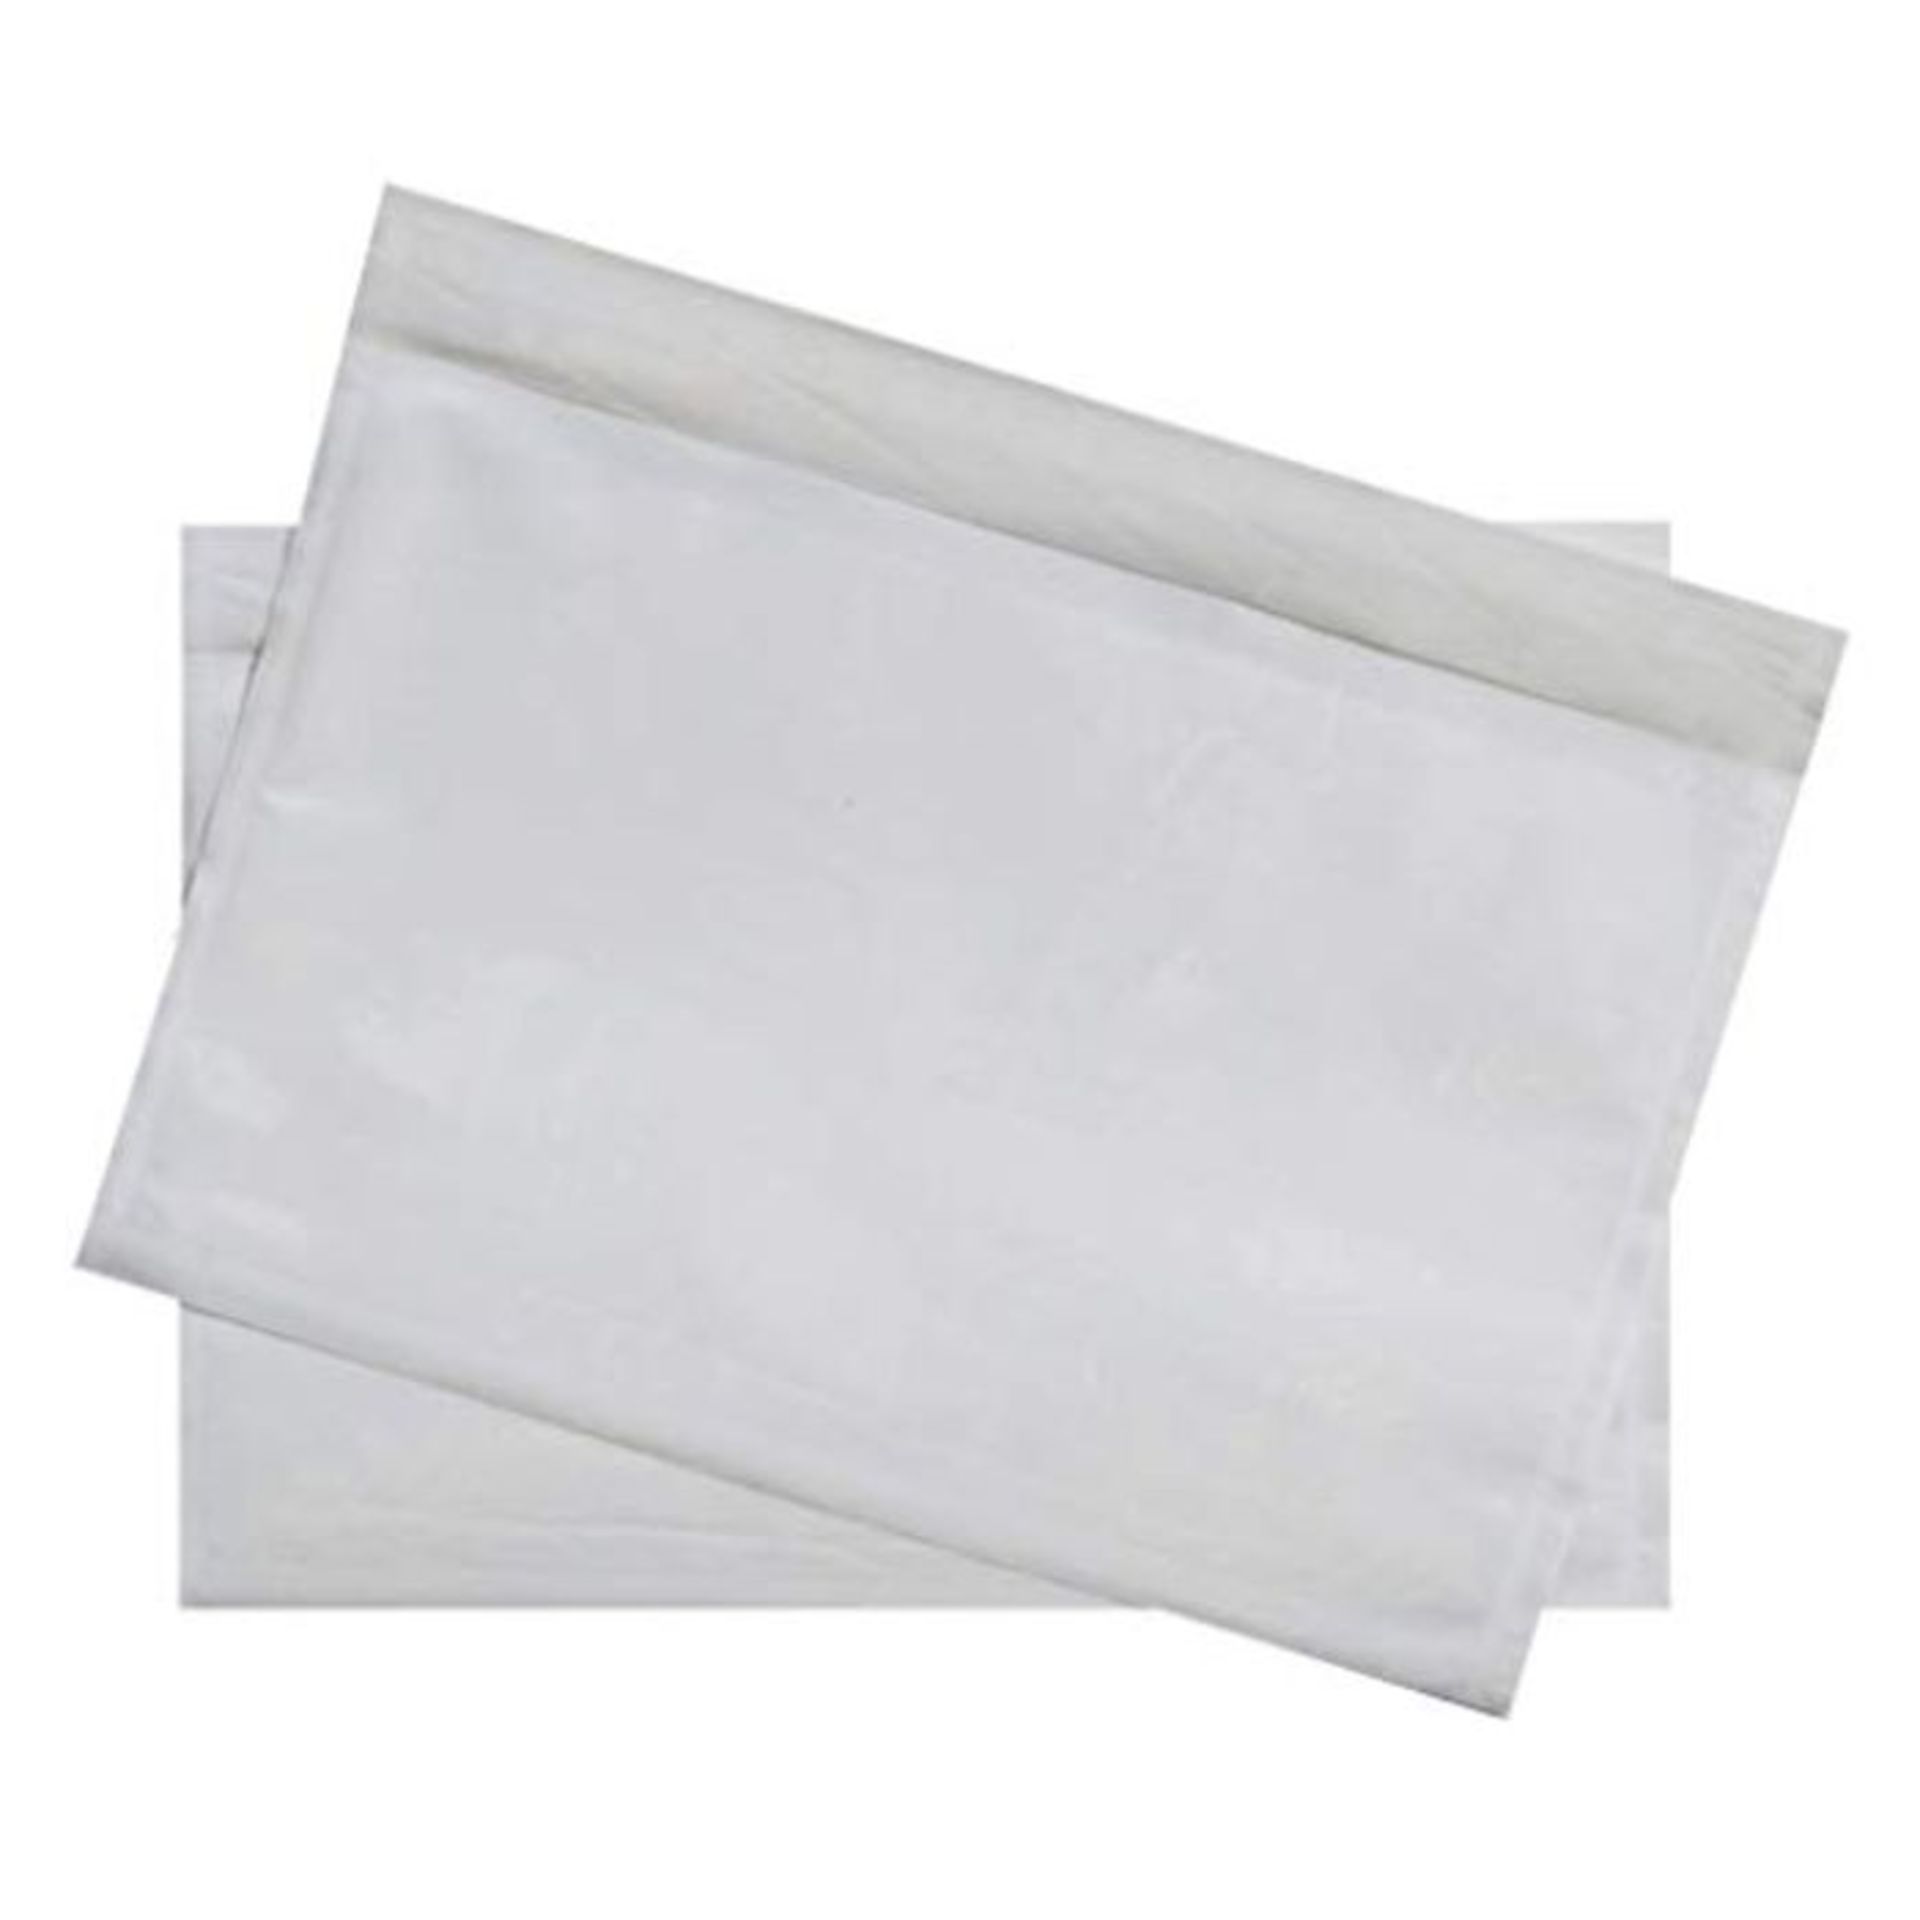 Pack of 000 Transparent DIN C6 Packaging Envelopes 175 x 130 mm Self-Adhesive Paper Ba